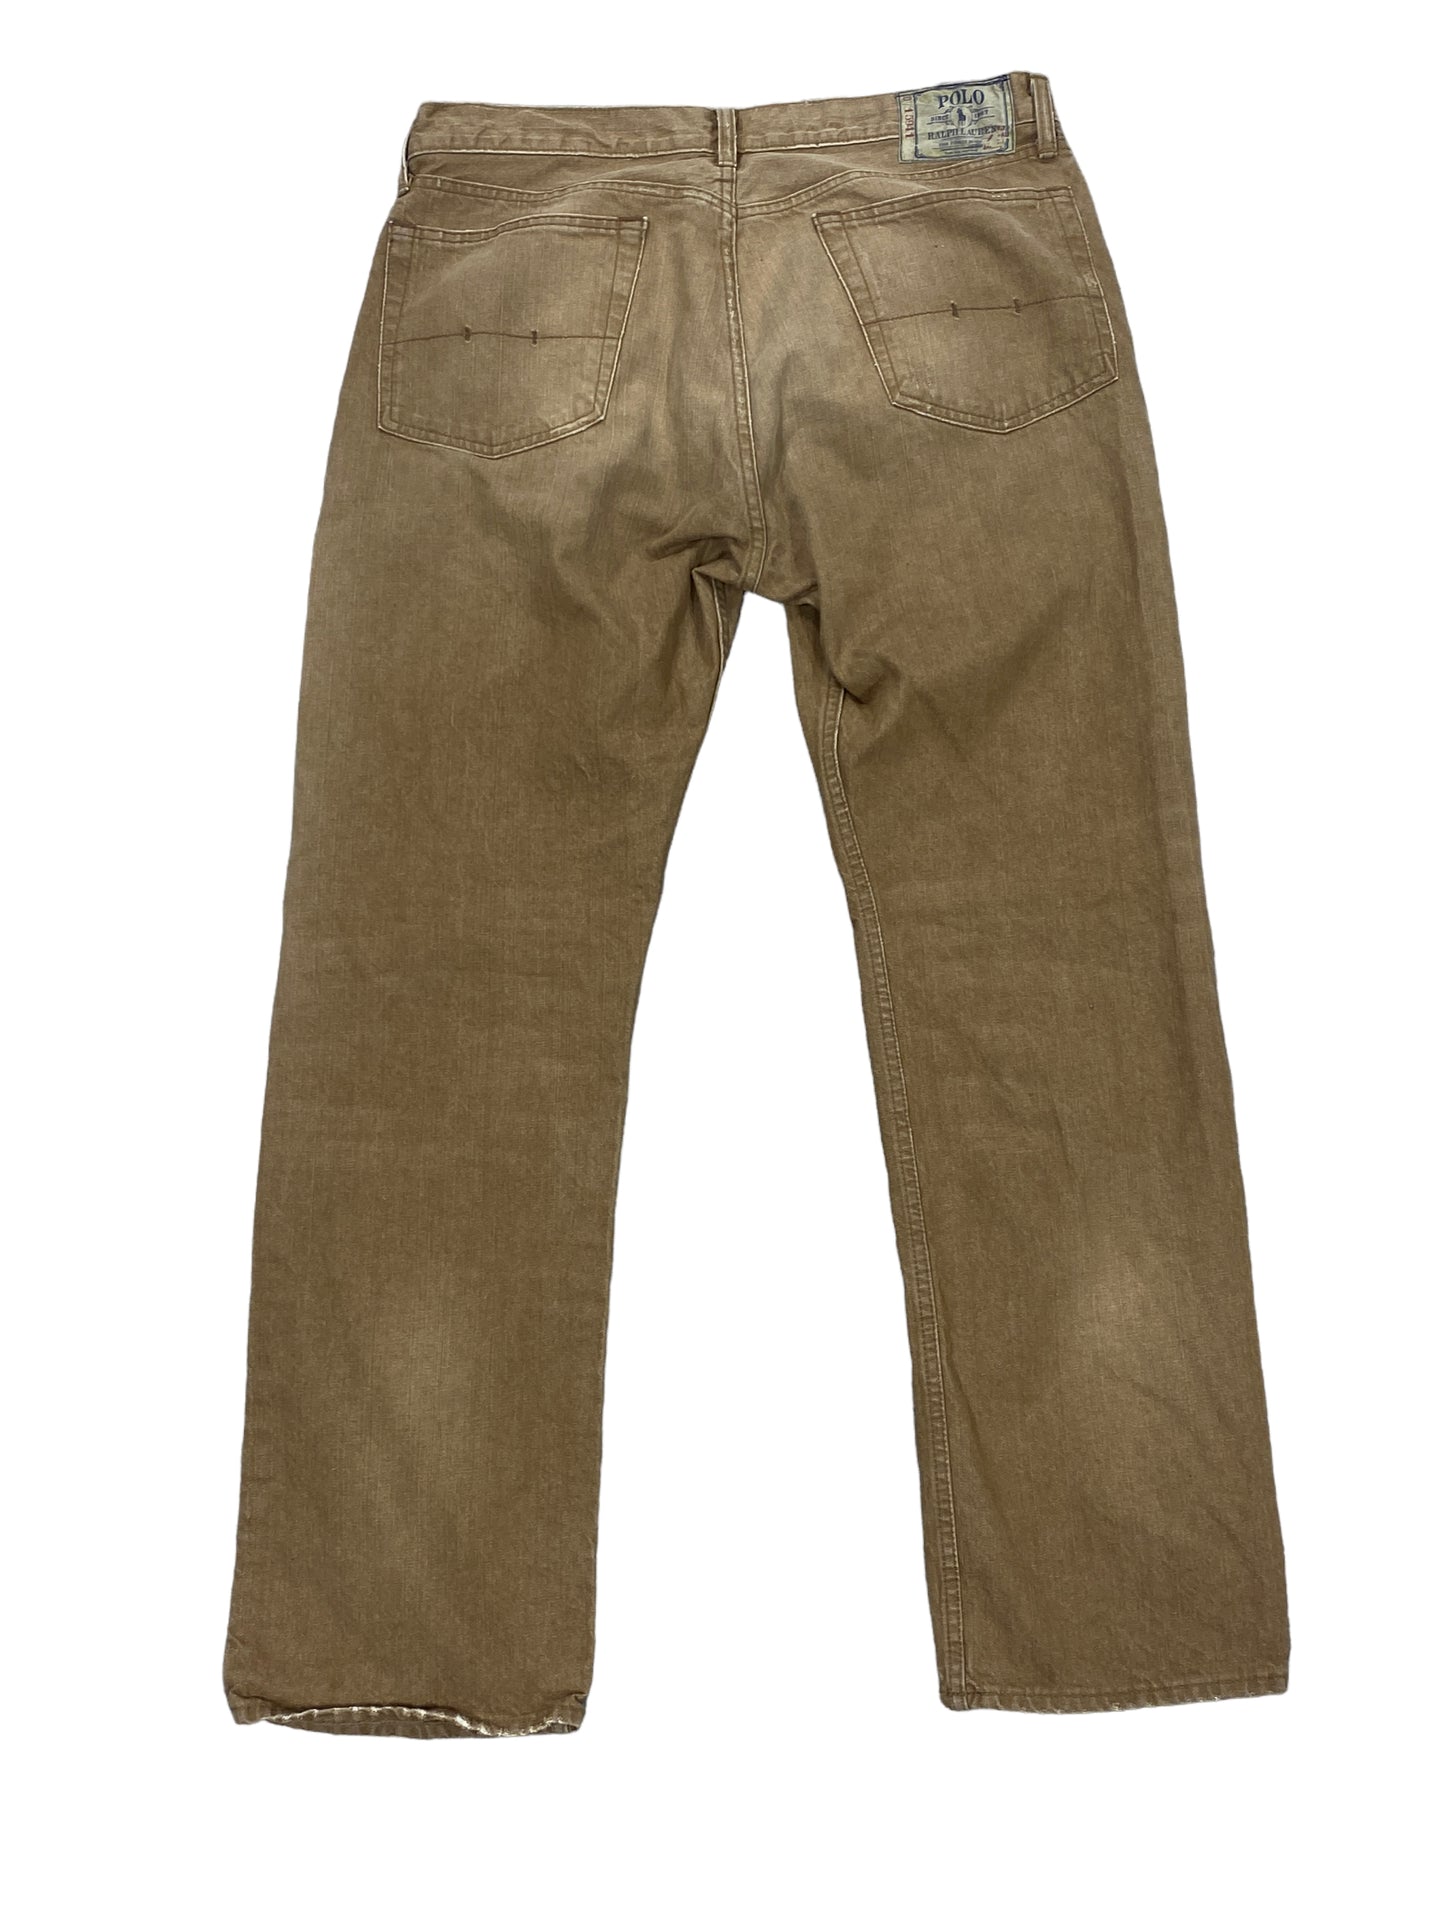 Vintage Polo Ralph Lauren Baxter Embroidered Tan Pants Size 36x32